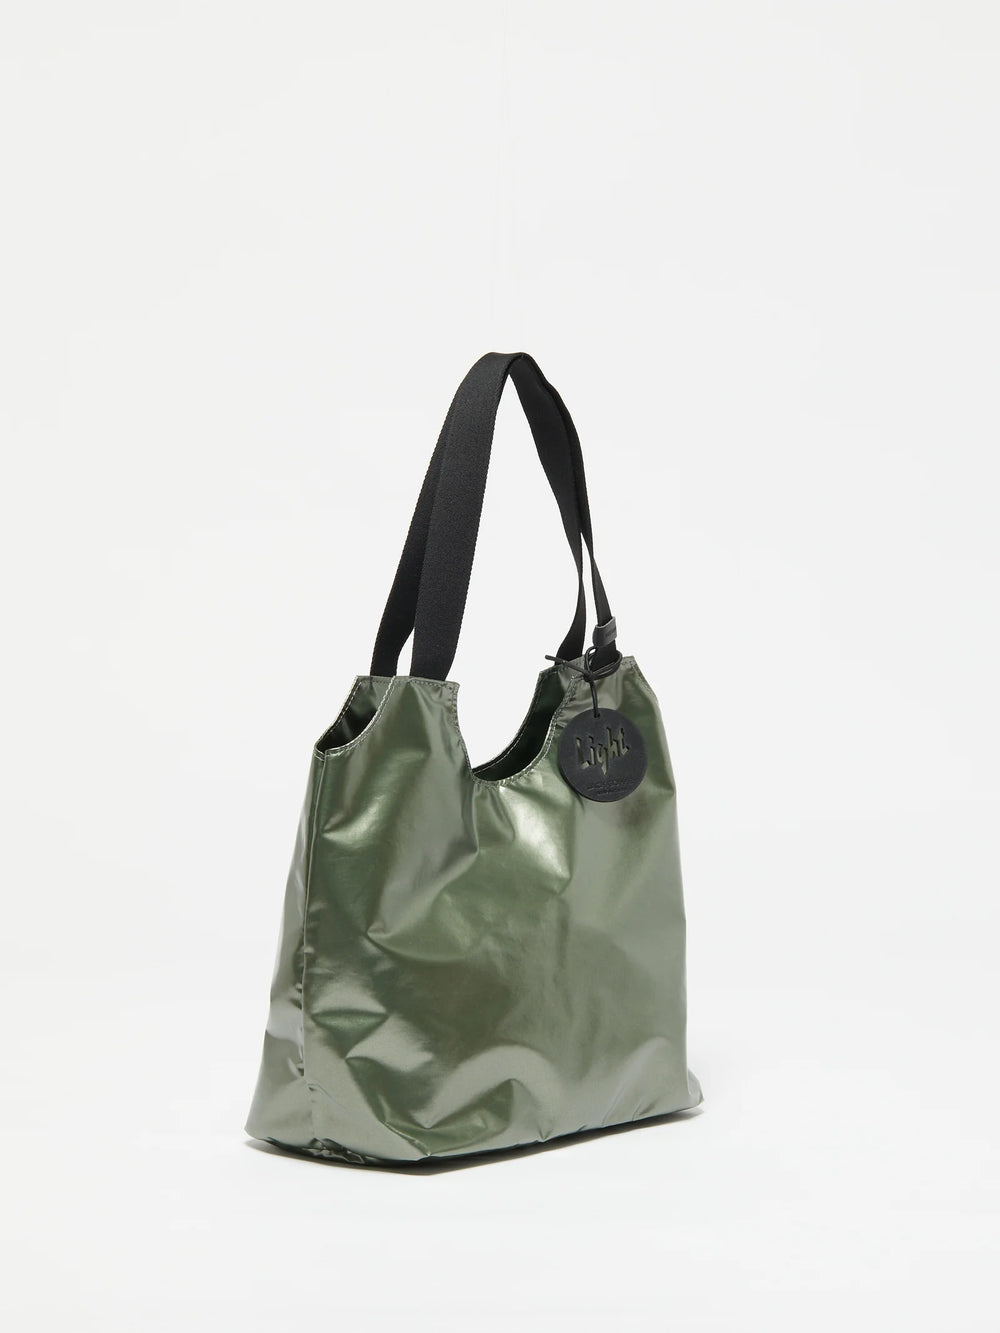 Jack Gomme Tilly Light Shopping Bag - Seaweed